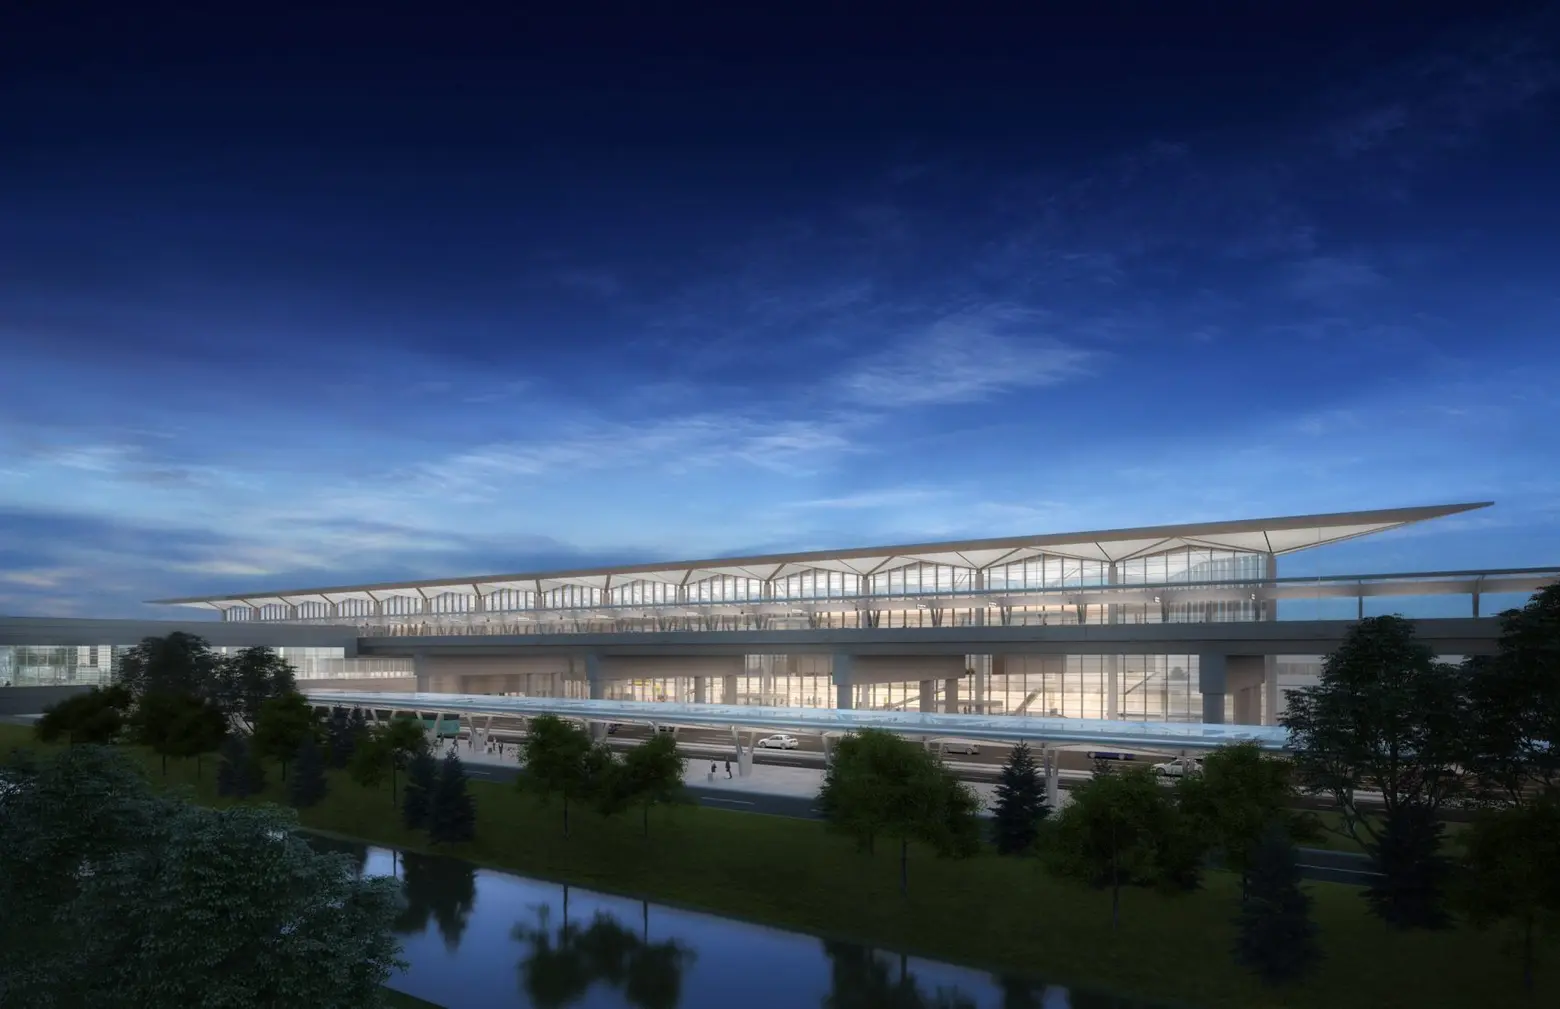 newark airport, newark liberty airport, terminal one, grimshaw architects, newark airport renovation